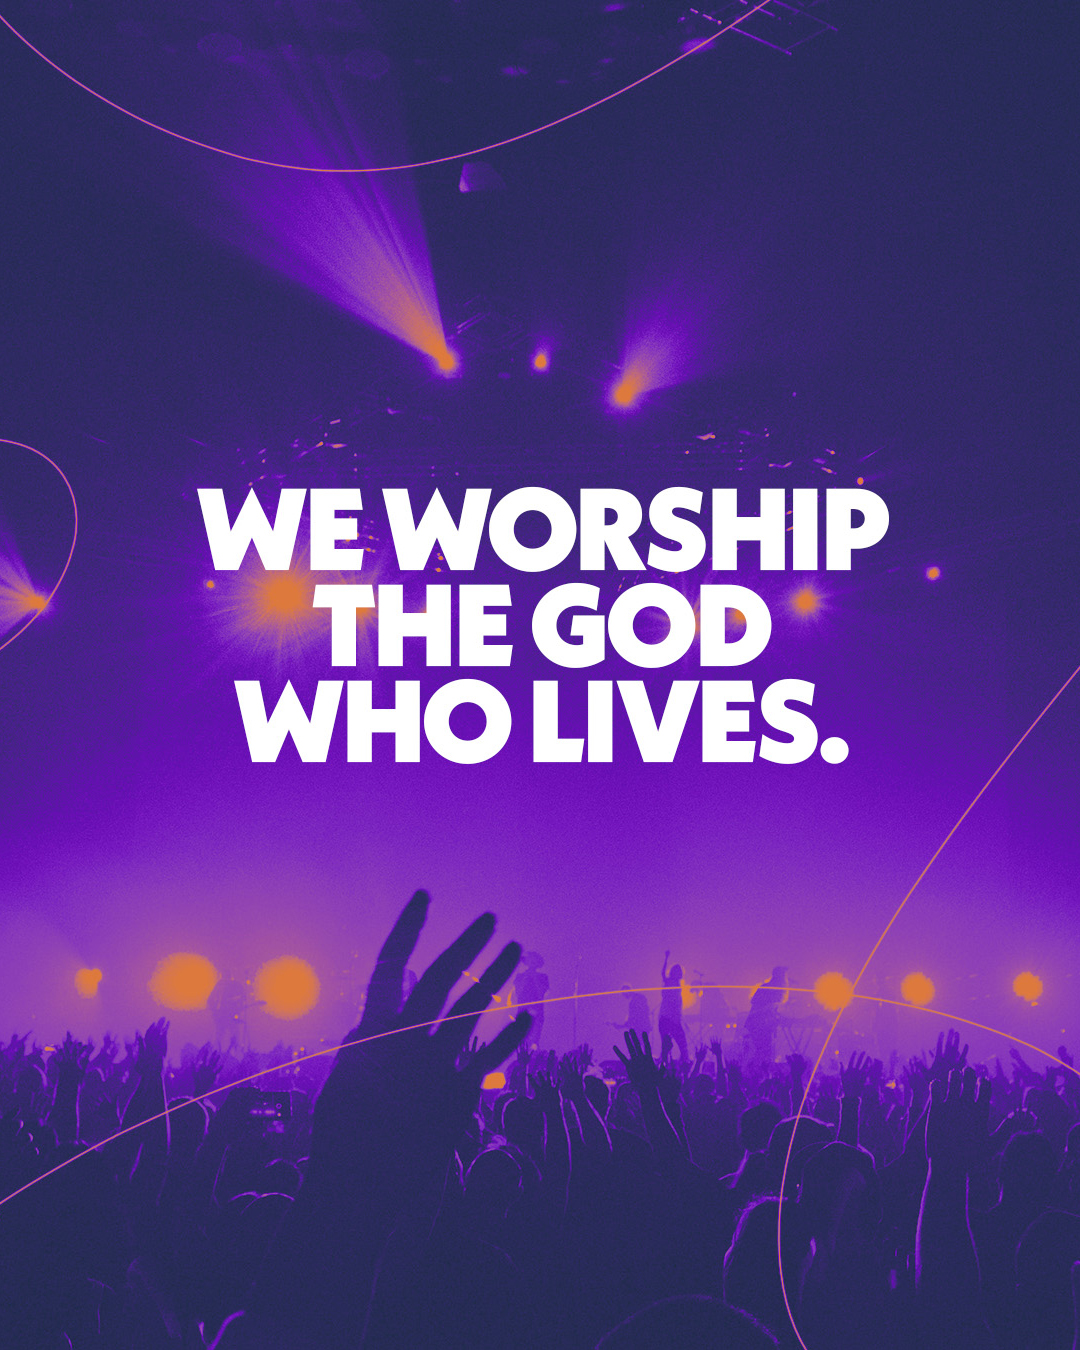 We worship the God who lives.